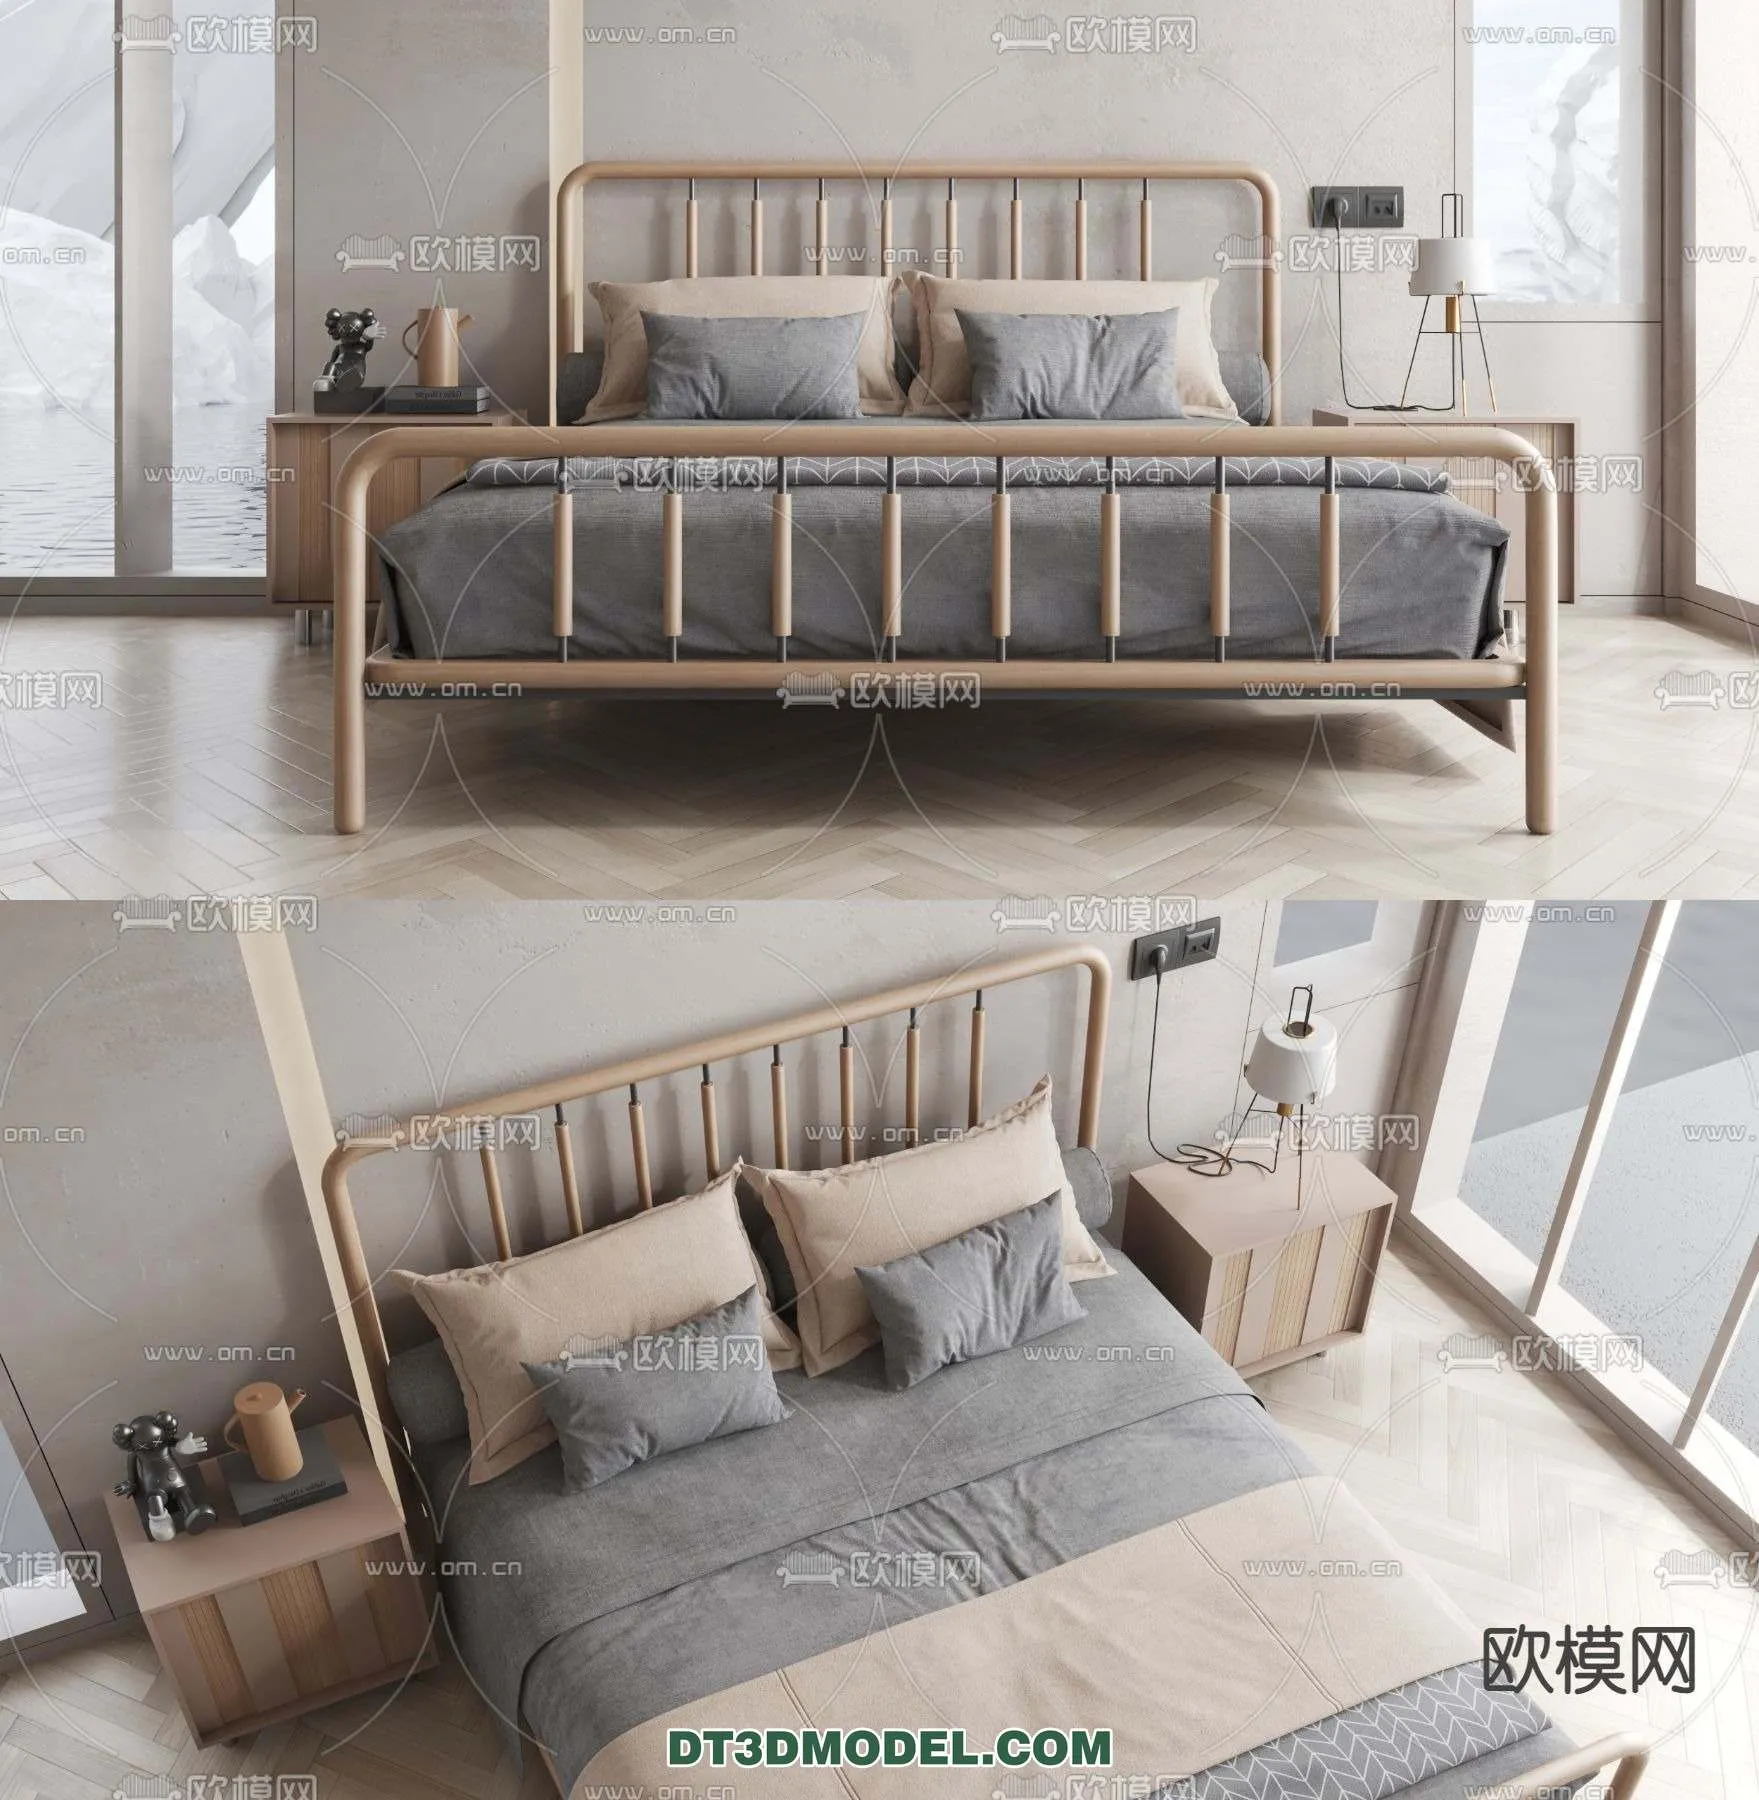 Double Bed 3D Models – 0025